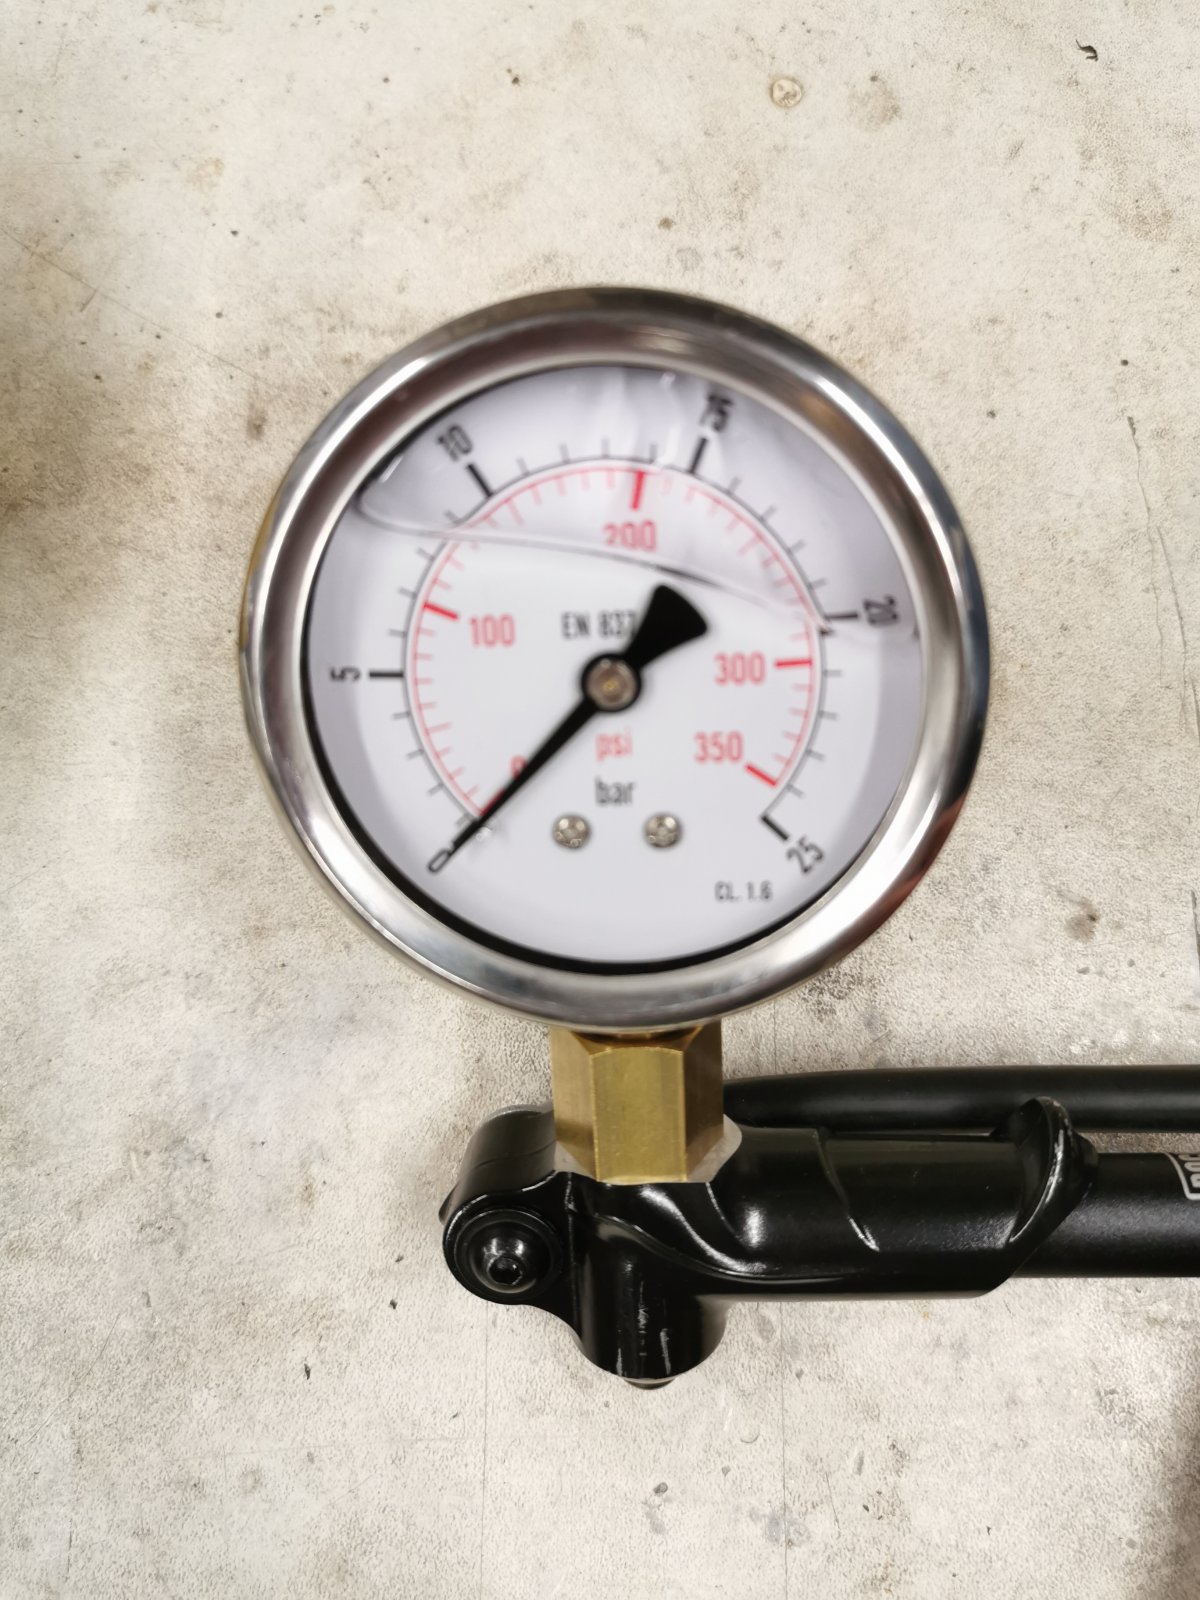 Wasserdruckmessgerät - So funktioniert's